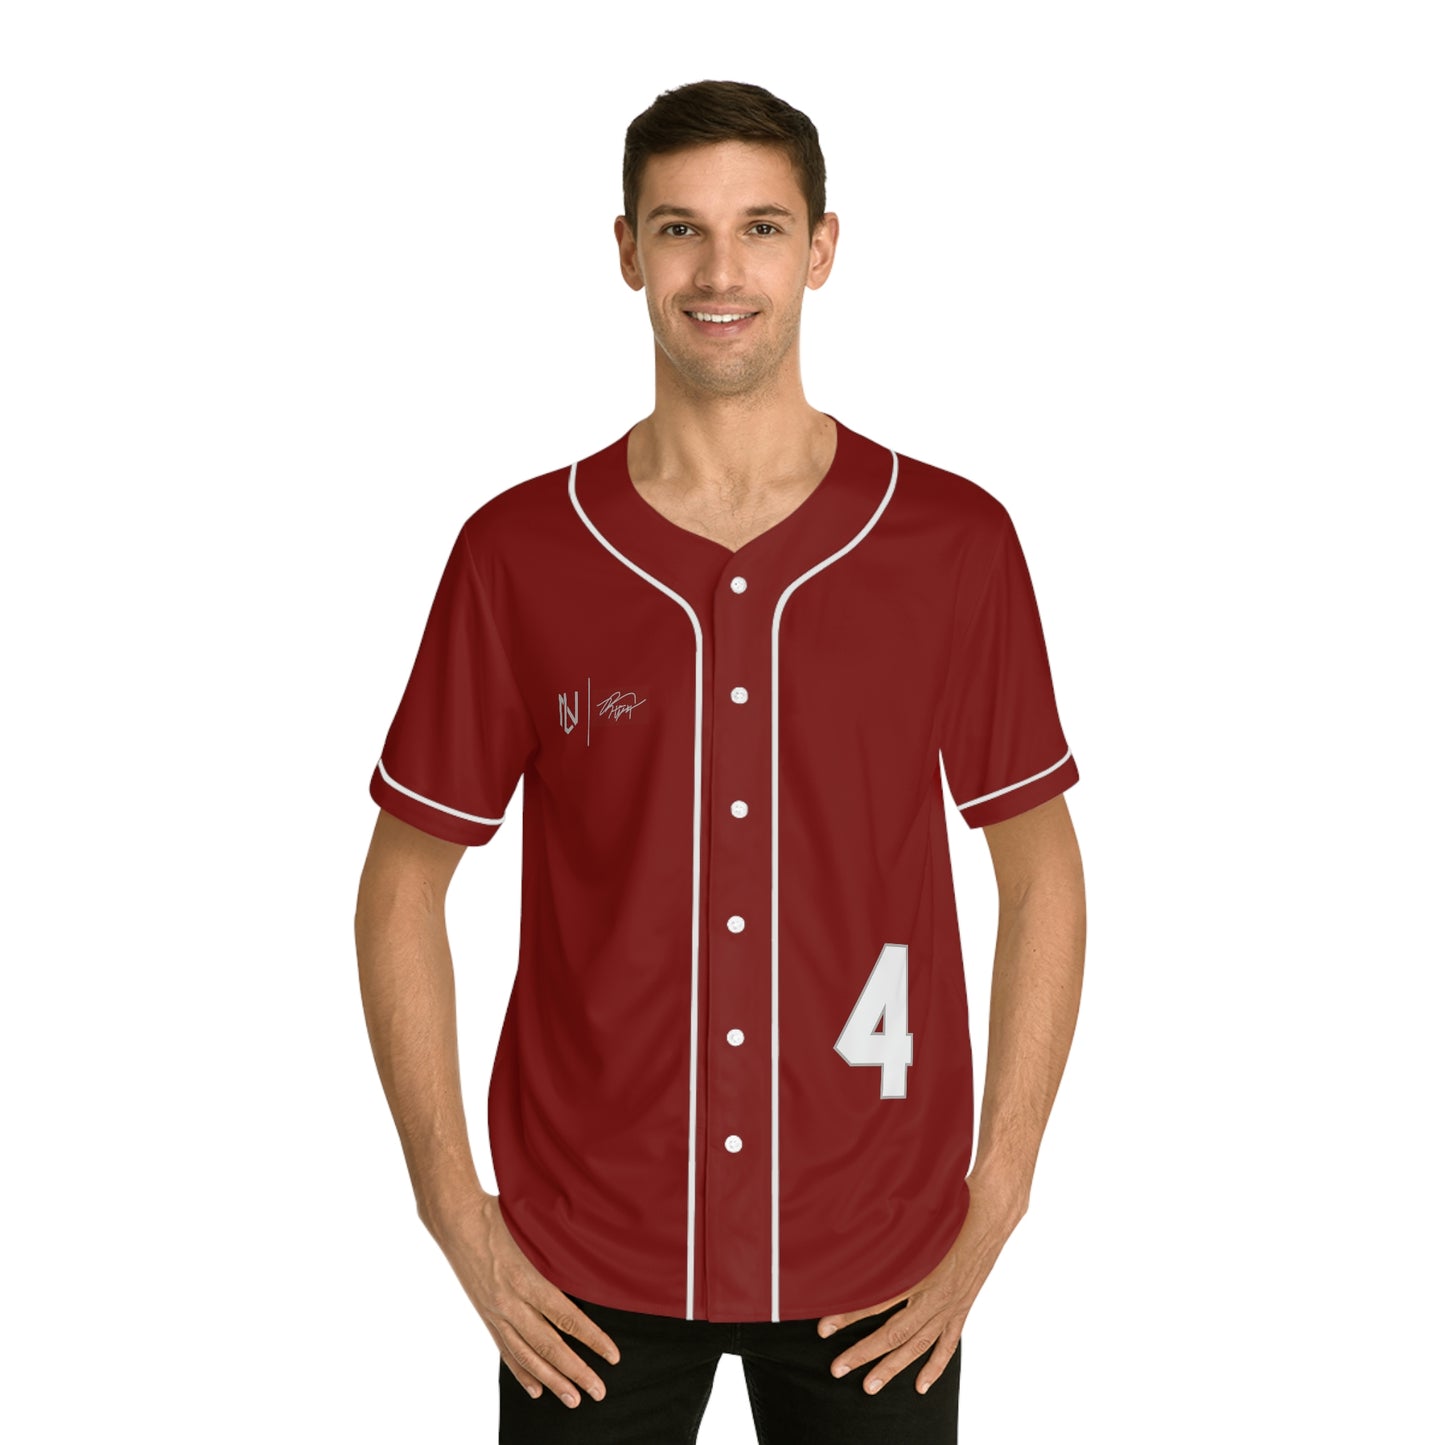 Ryland Hixon Baseball Jersey (Red)